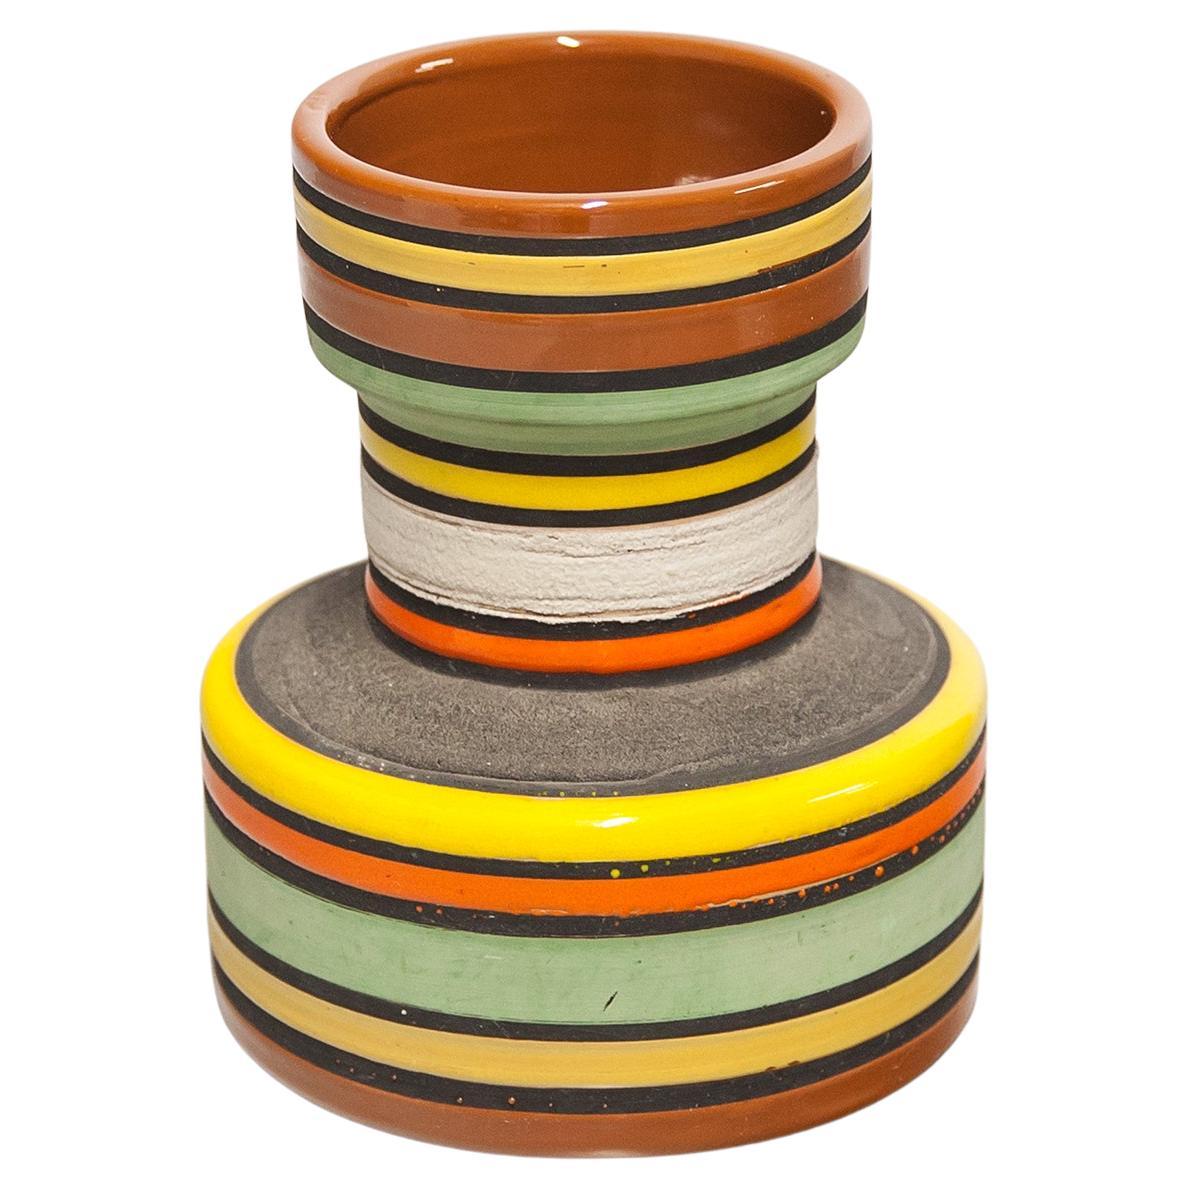 Aldo Londi Bitossi Raymor Keramikvase mit orangefarbenen Streifen, Keramik, Italien 1960er Jahre im Angebot